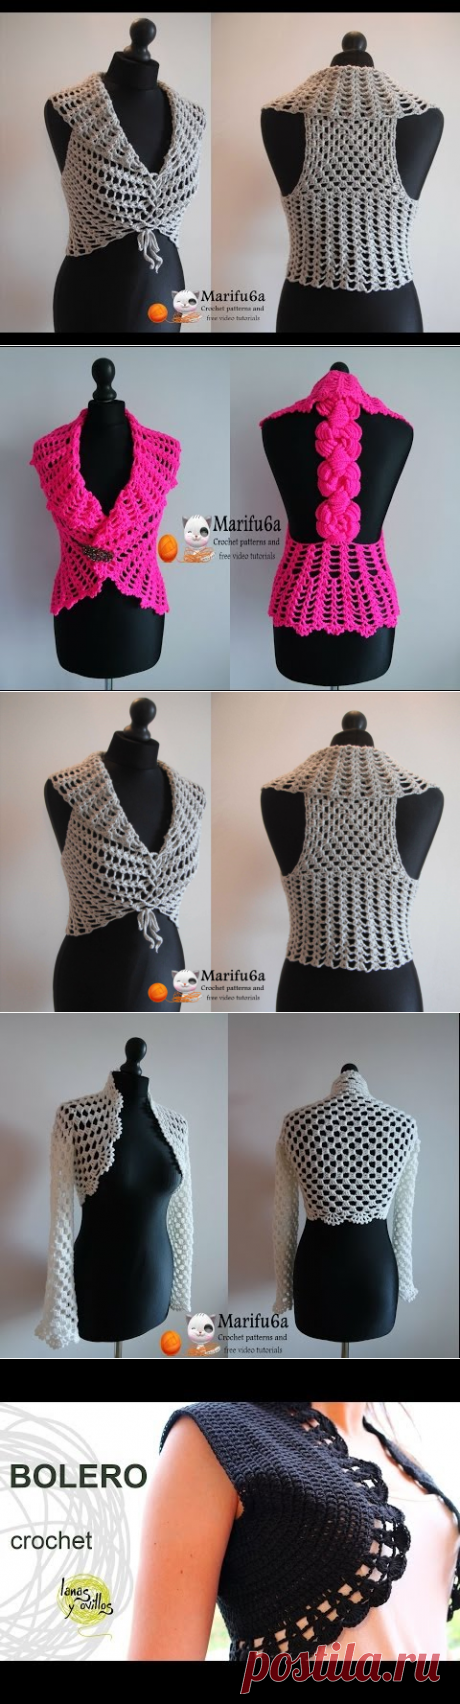 how to crochet vest bolero jacket with roses chaleco free pattern tutorial by marifu6a - YouTube